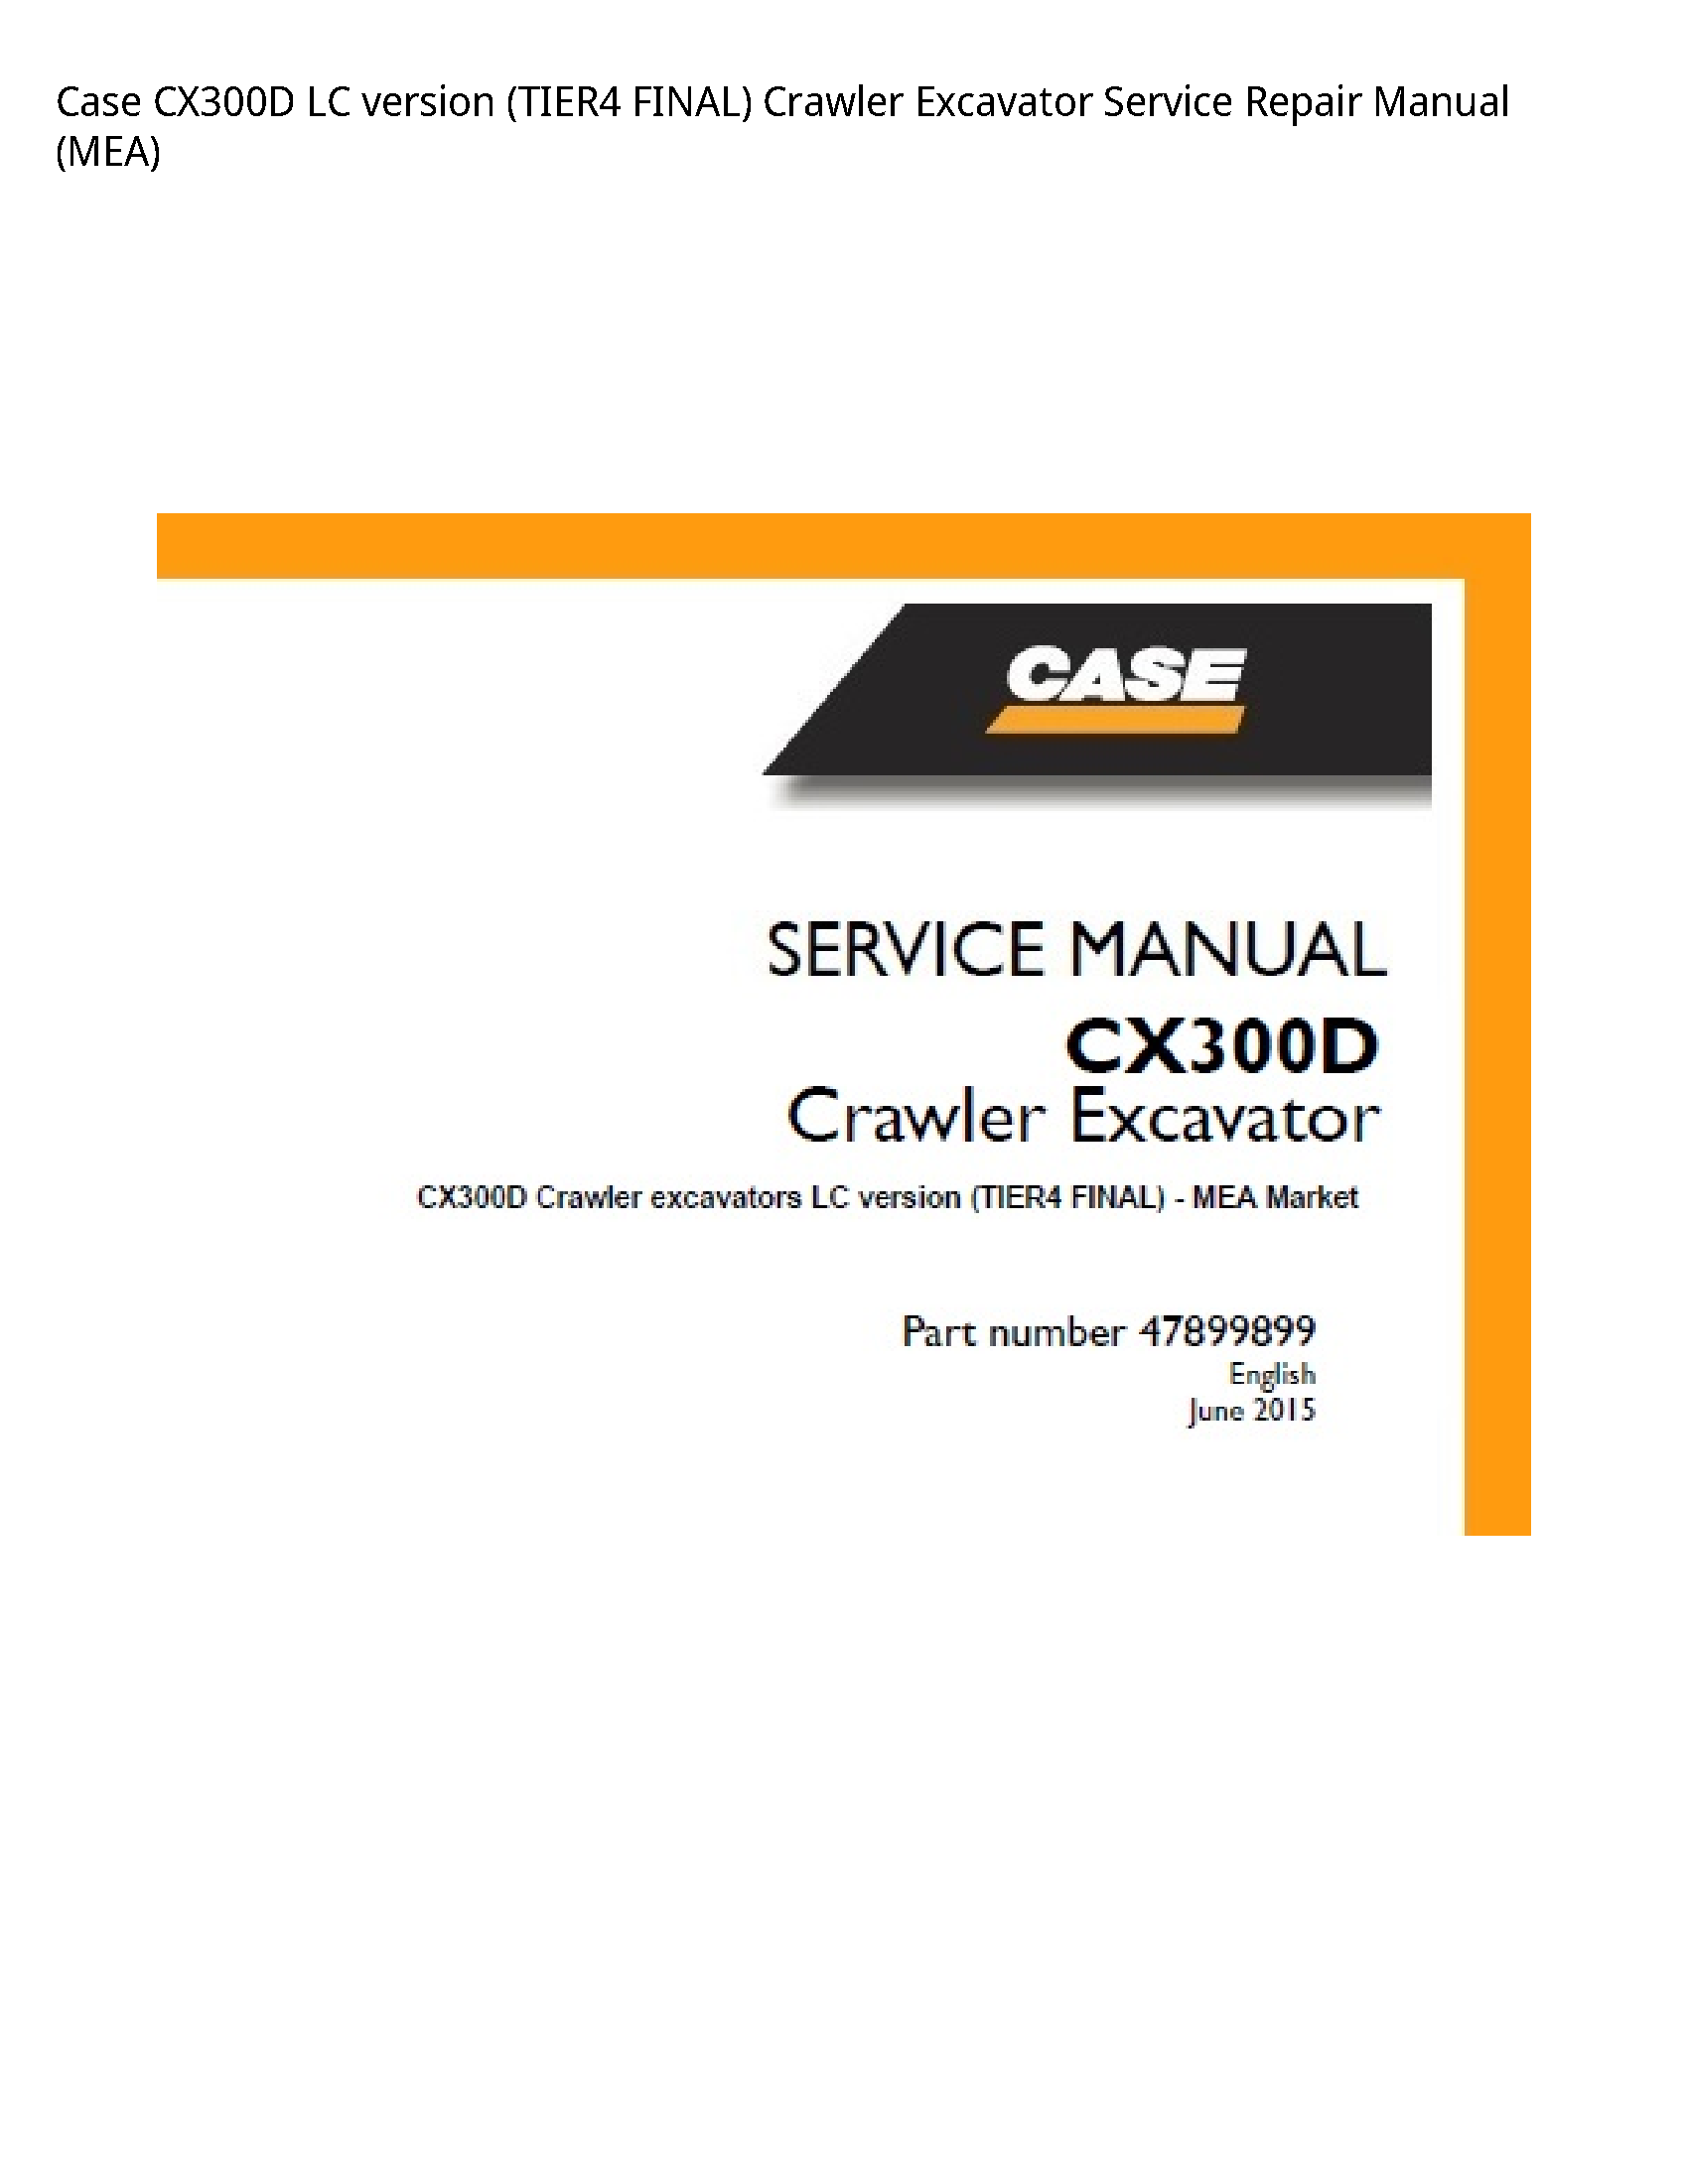 Case/Case IH CX300D LC version FINAL) Crawler Excavator manual